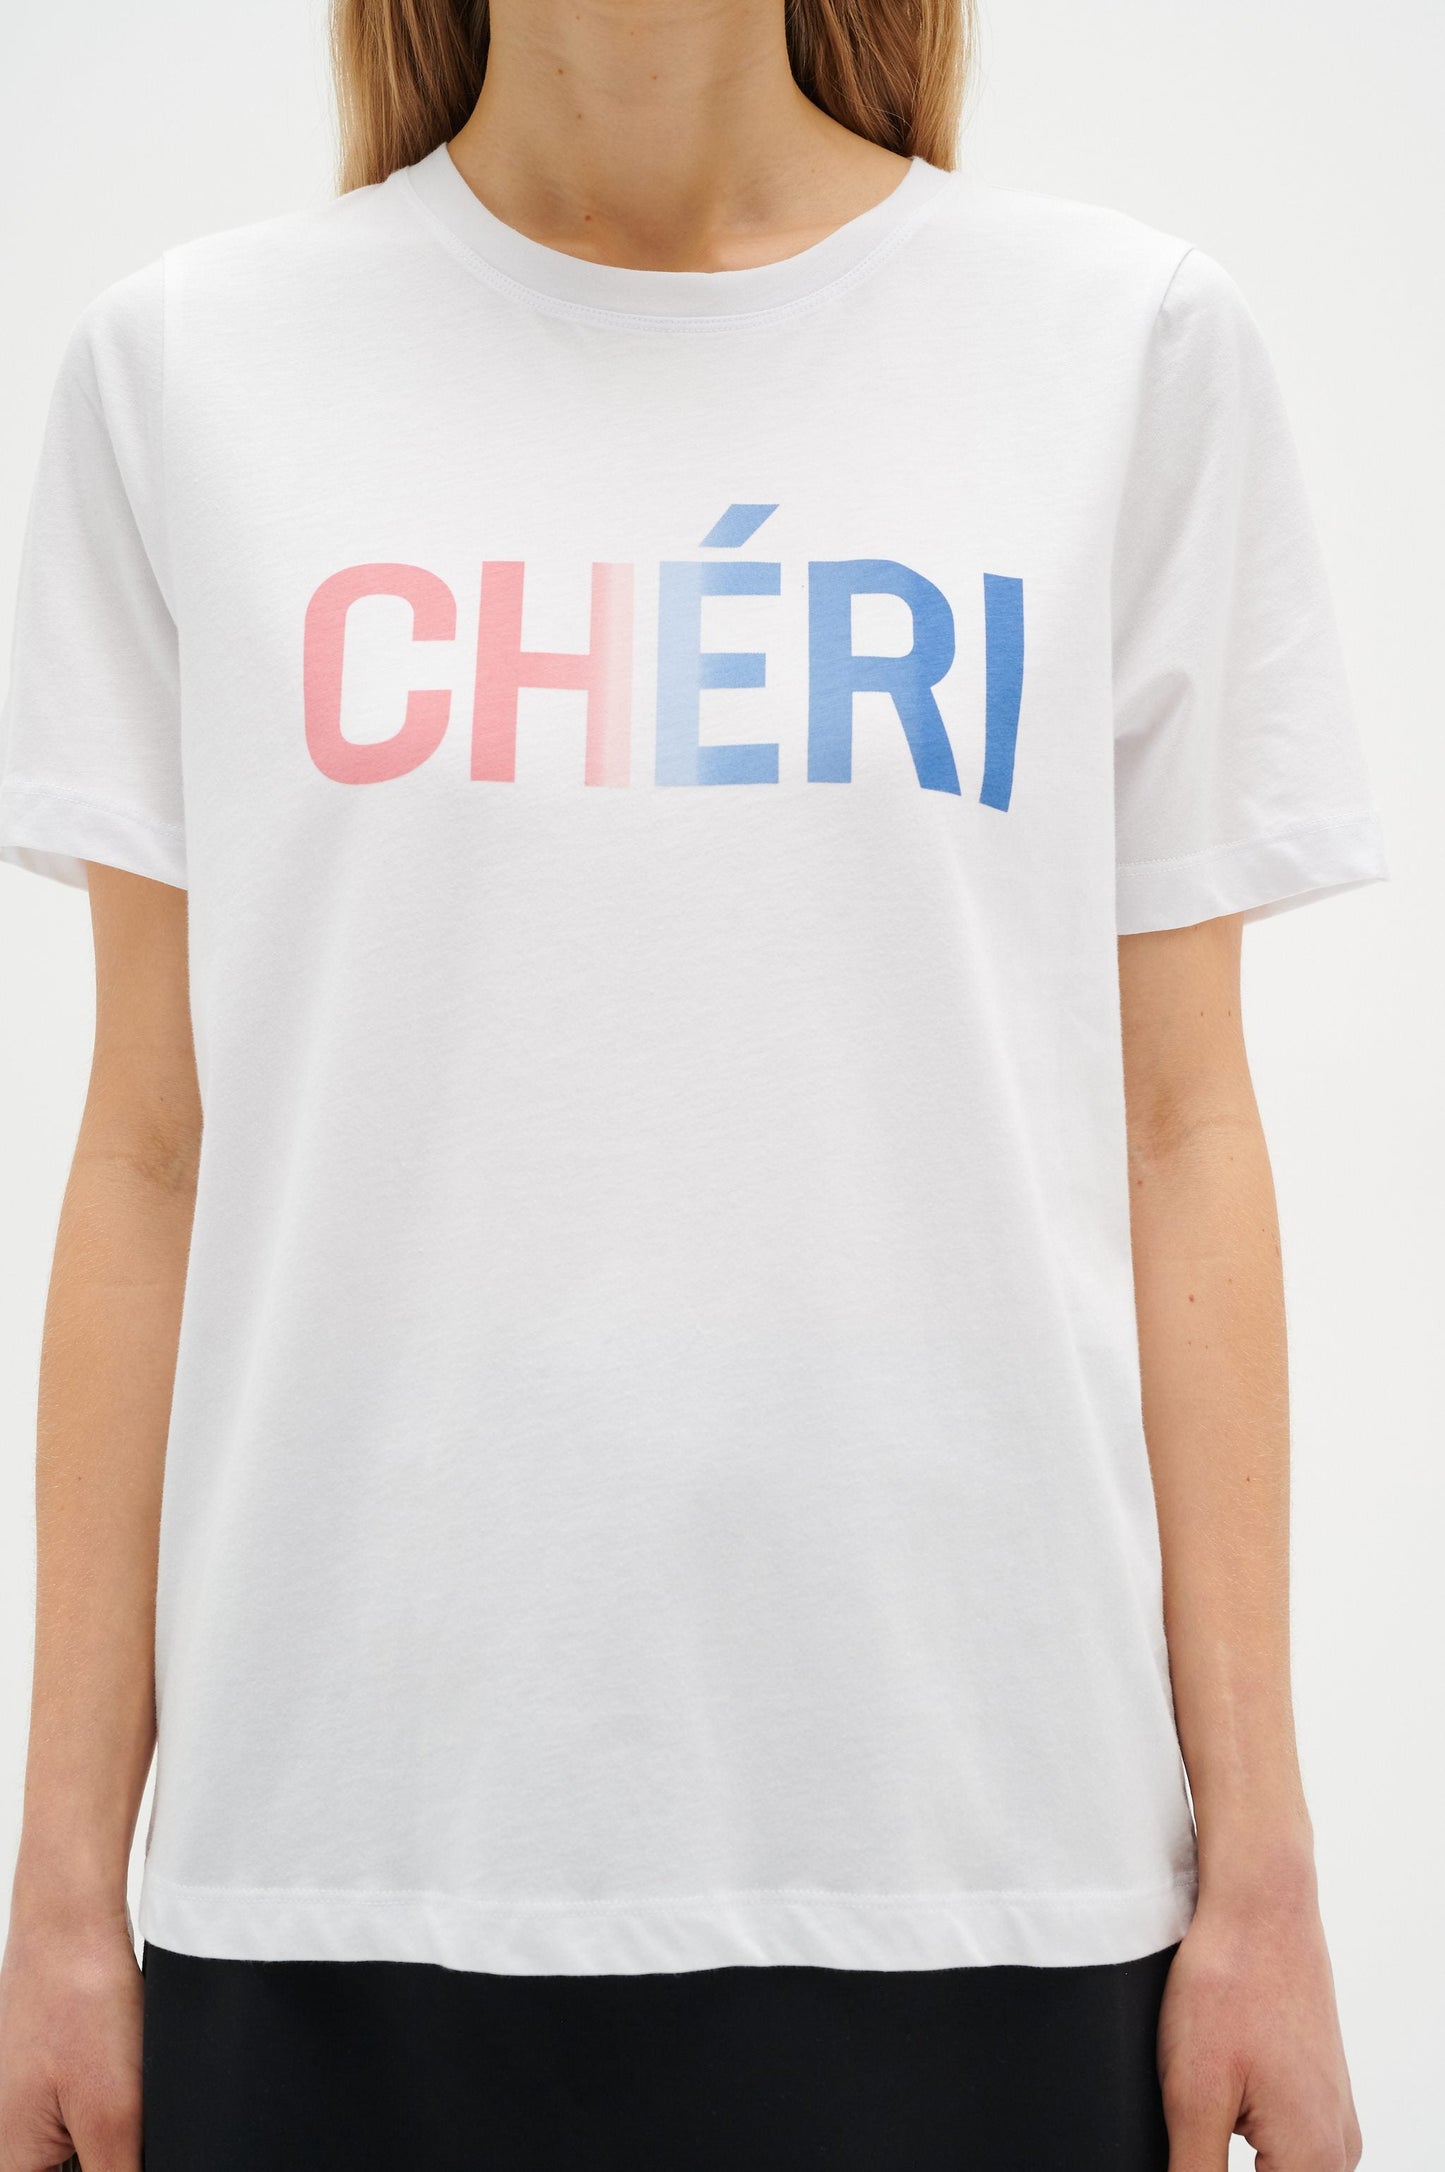 Inwear Zaki Frenchie Cheri t-skjorte